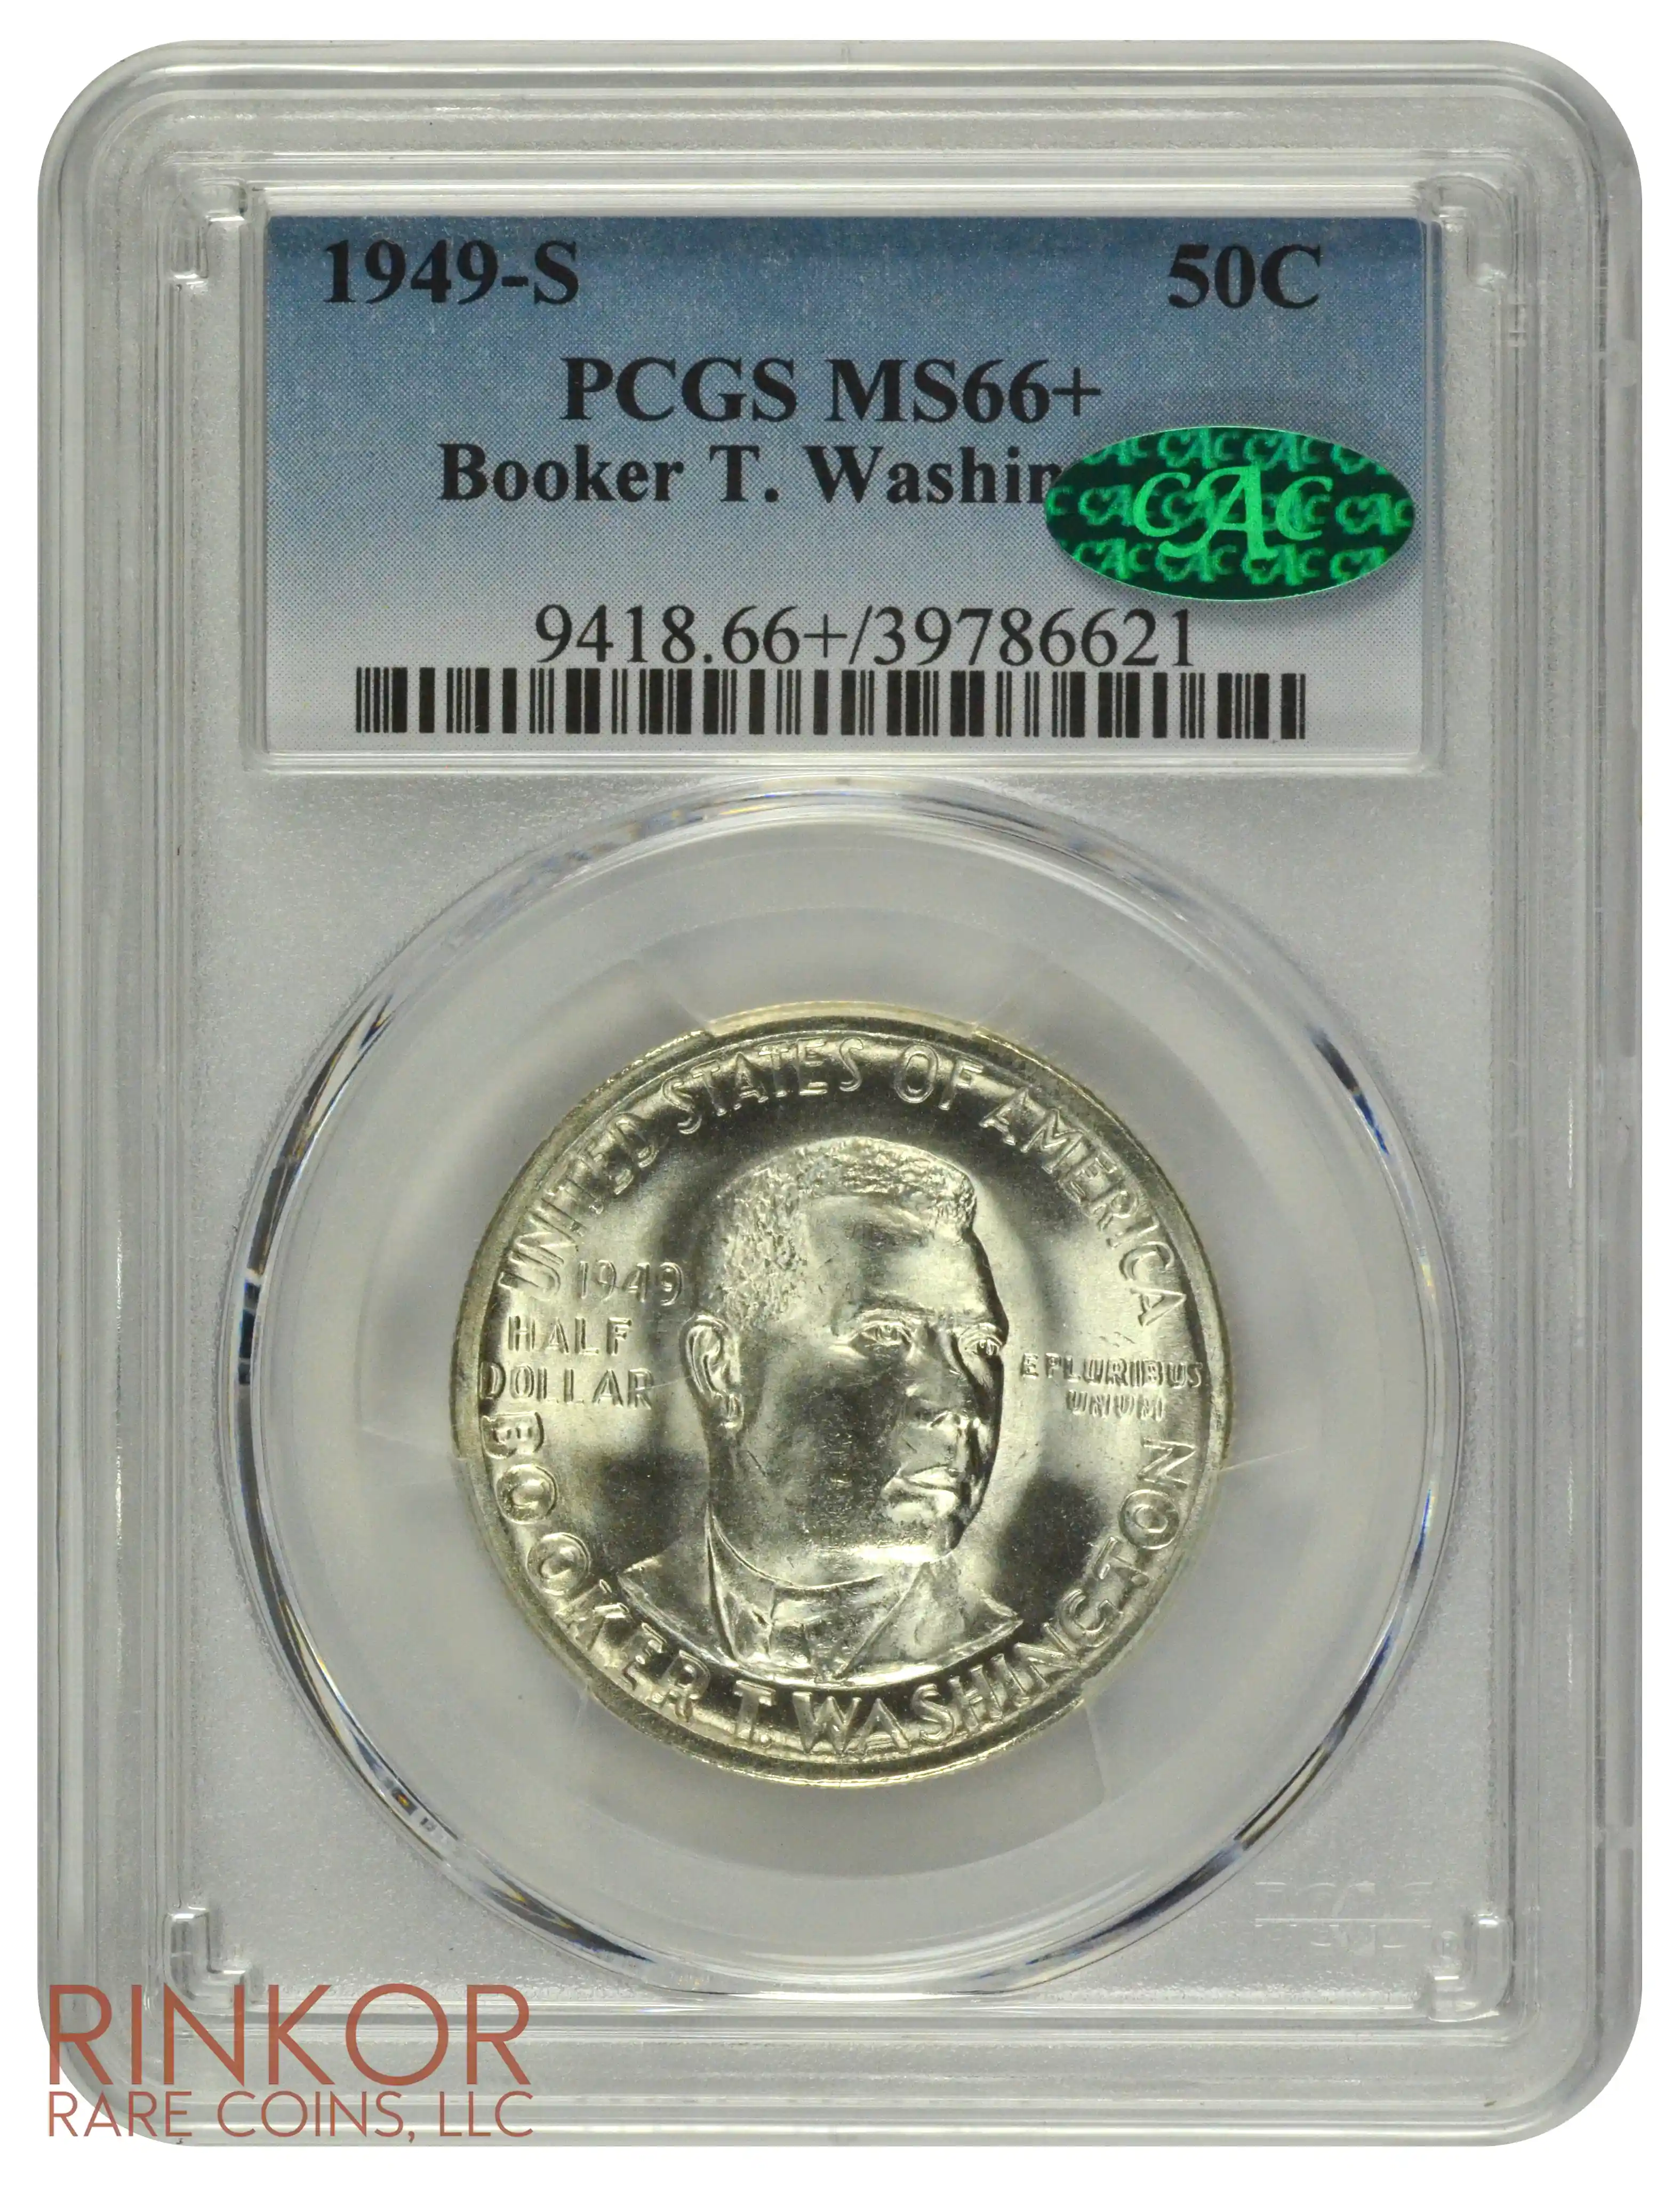 1949-S  Booker T. Washington Commemorative Half Dollar PCGS MS 66+ CAC